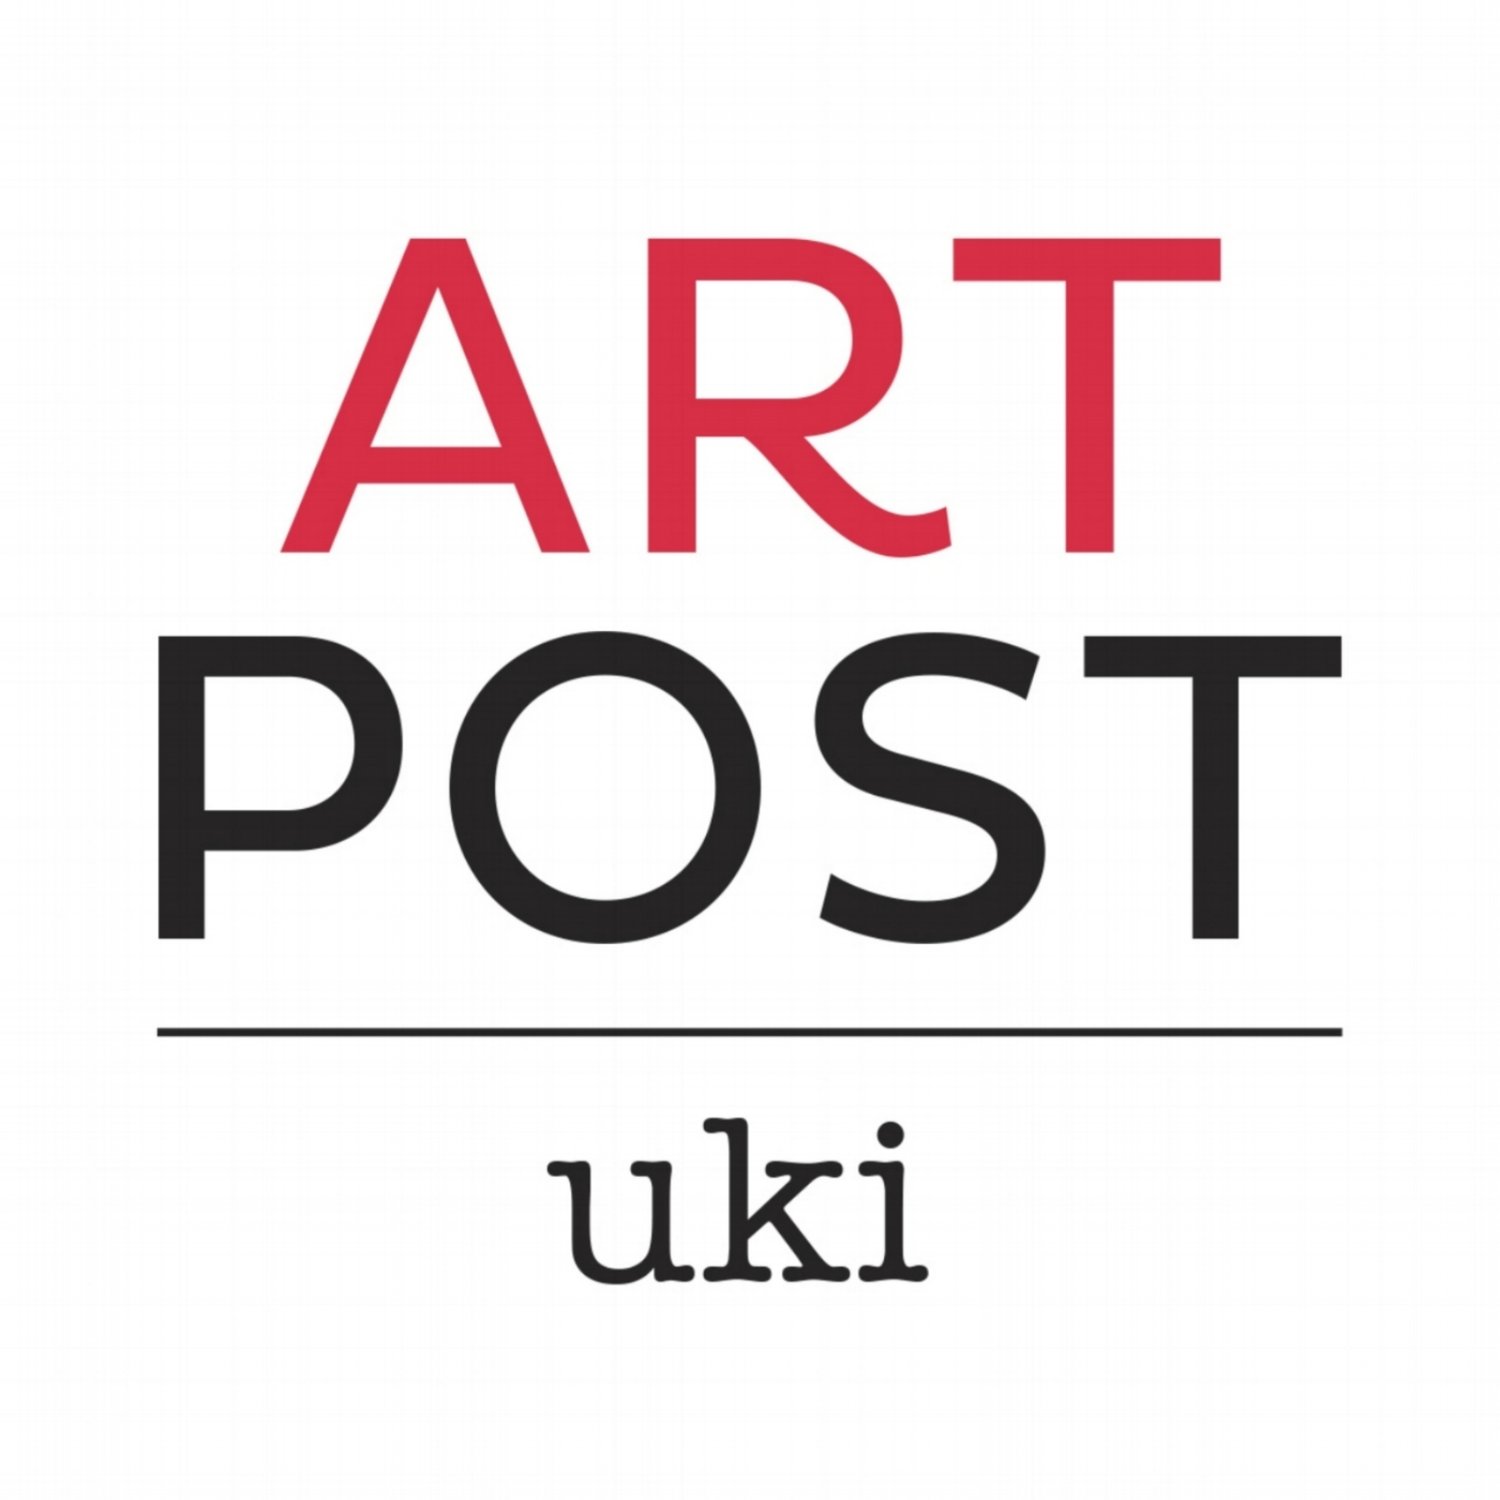 Art Post Uki